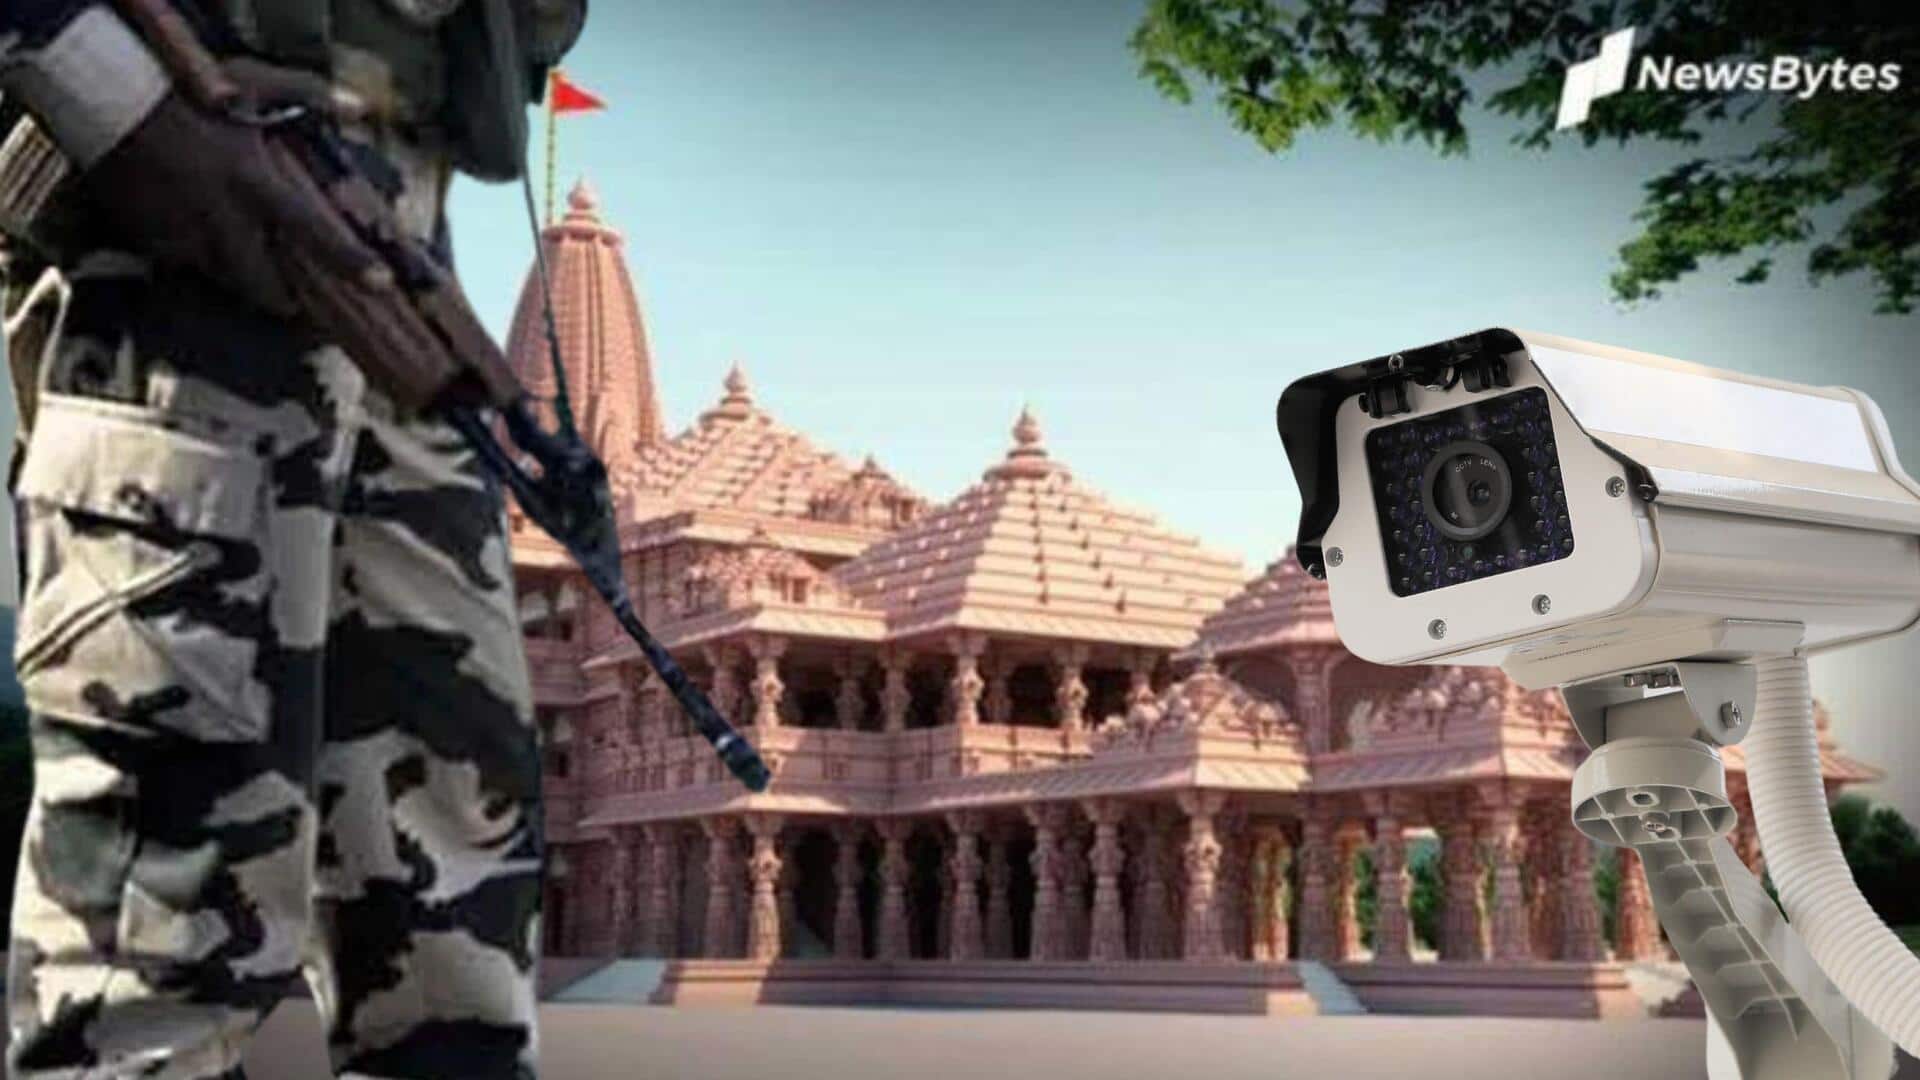 Ayodhya ram mandir: 13వేల మంది బలగాలు, 10వేల సీసీ కెమెరాలు.. రామమందిర ప్రారంభోత్సవానికి భద్రత కట్టుదిట్టం 